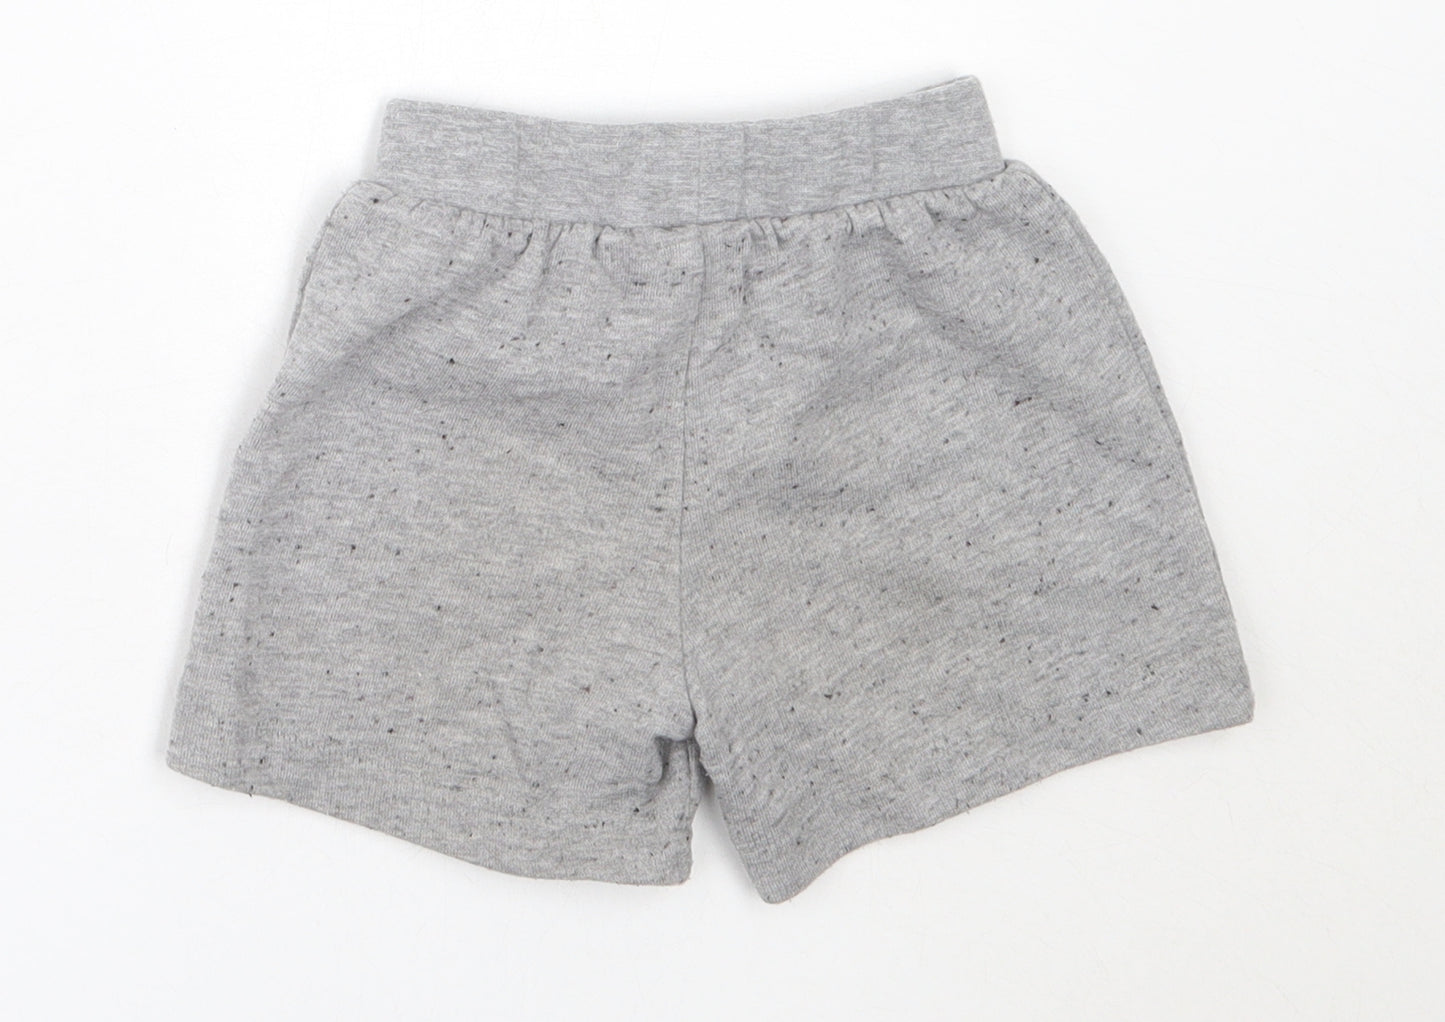 George Boys Grey  Polyester Sweat Shorts Size 2-3 Years  Regular